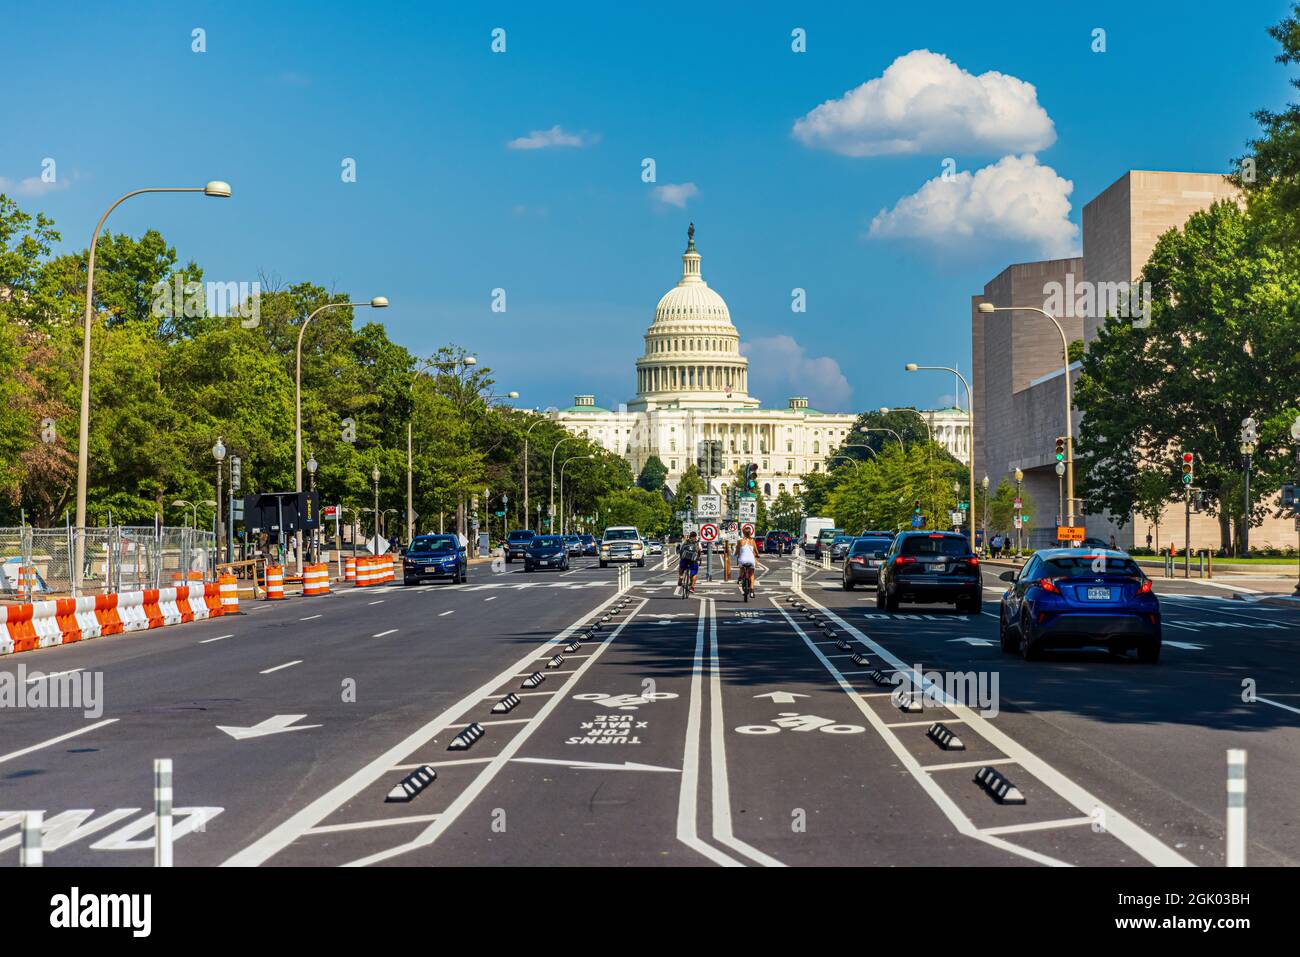 WASHINGTON DC, USA - AUGUST 14: Capitol seen from Pennsylvania Avenue. Stock Photo